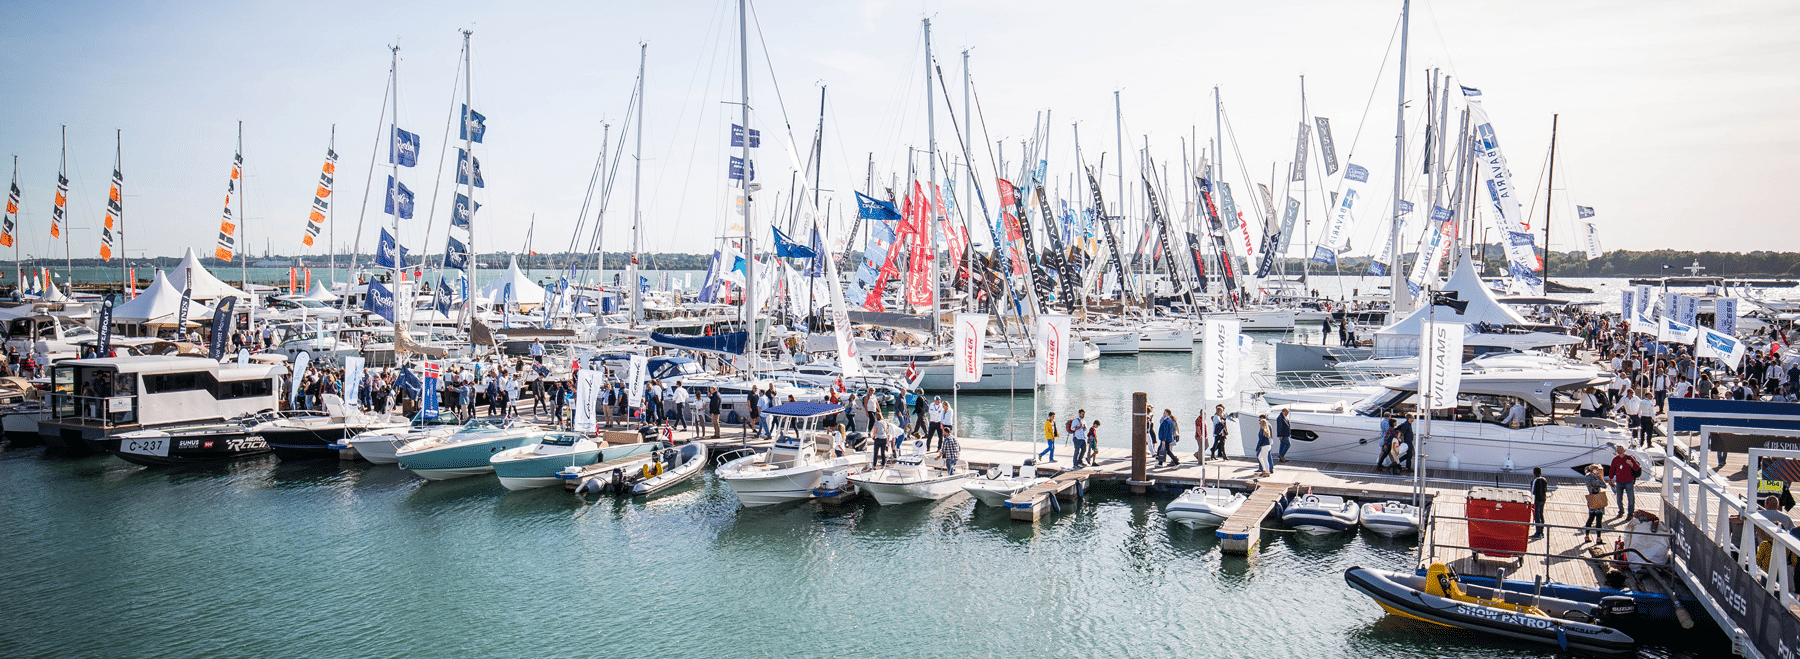 Southampton International Boat Show 2023